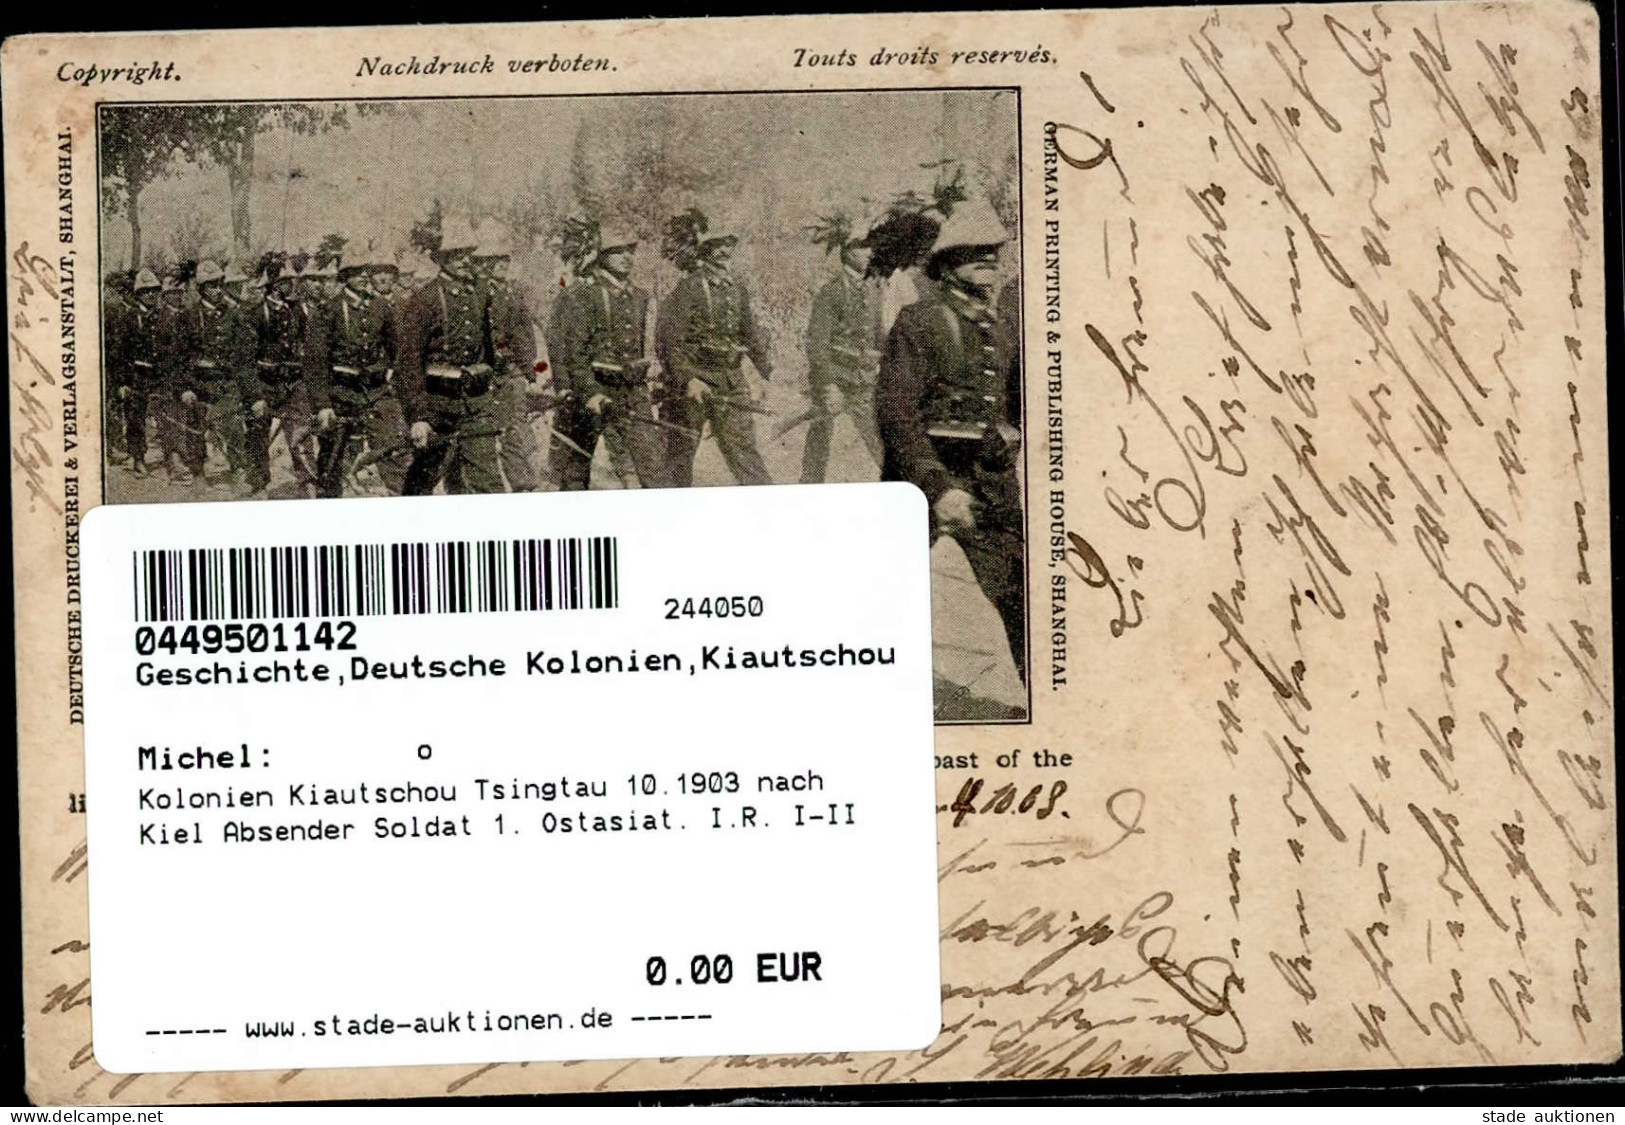 Kolonien Kiautschou Tsingtau 10.1903 Nach Kiel Absender Soldat 1. Ostasiat. I.R. I-II Colonies - Ehemalige Dt. Kolonien